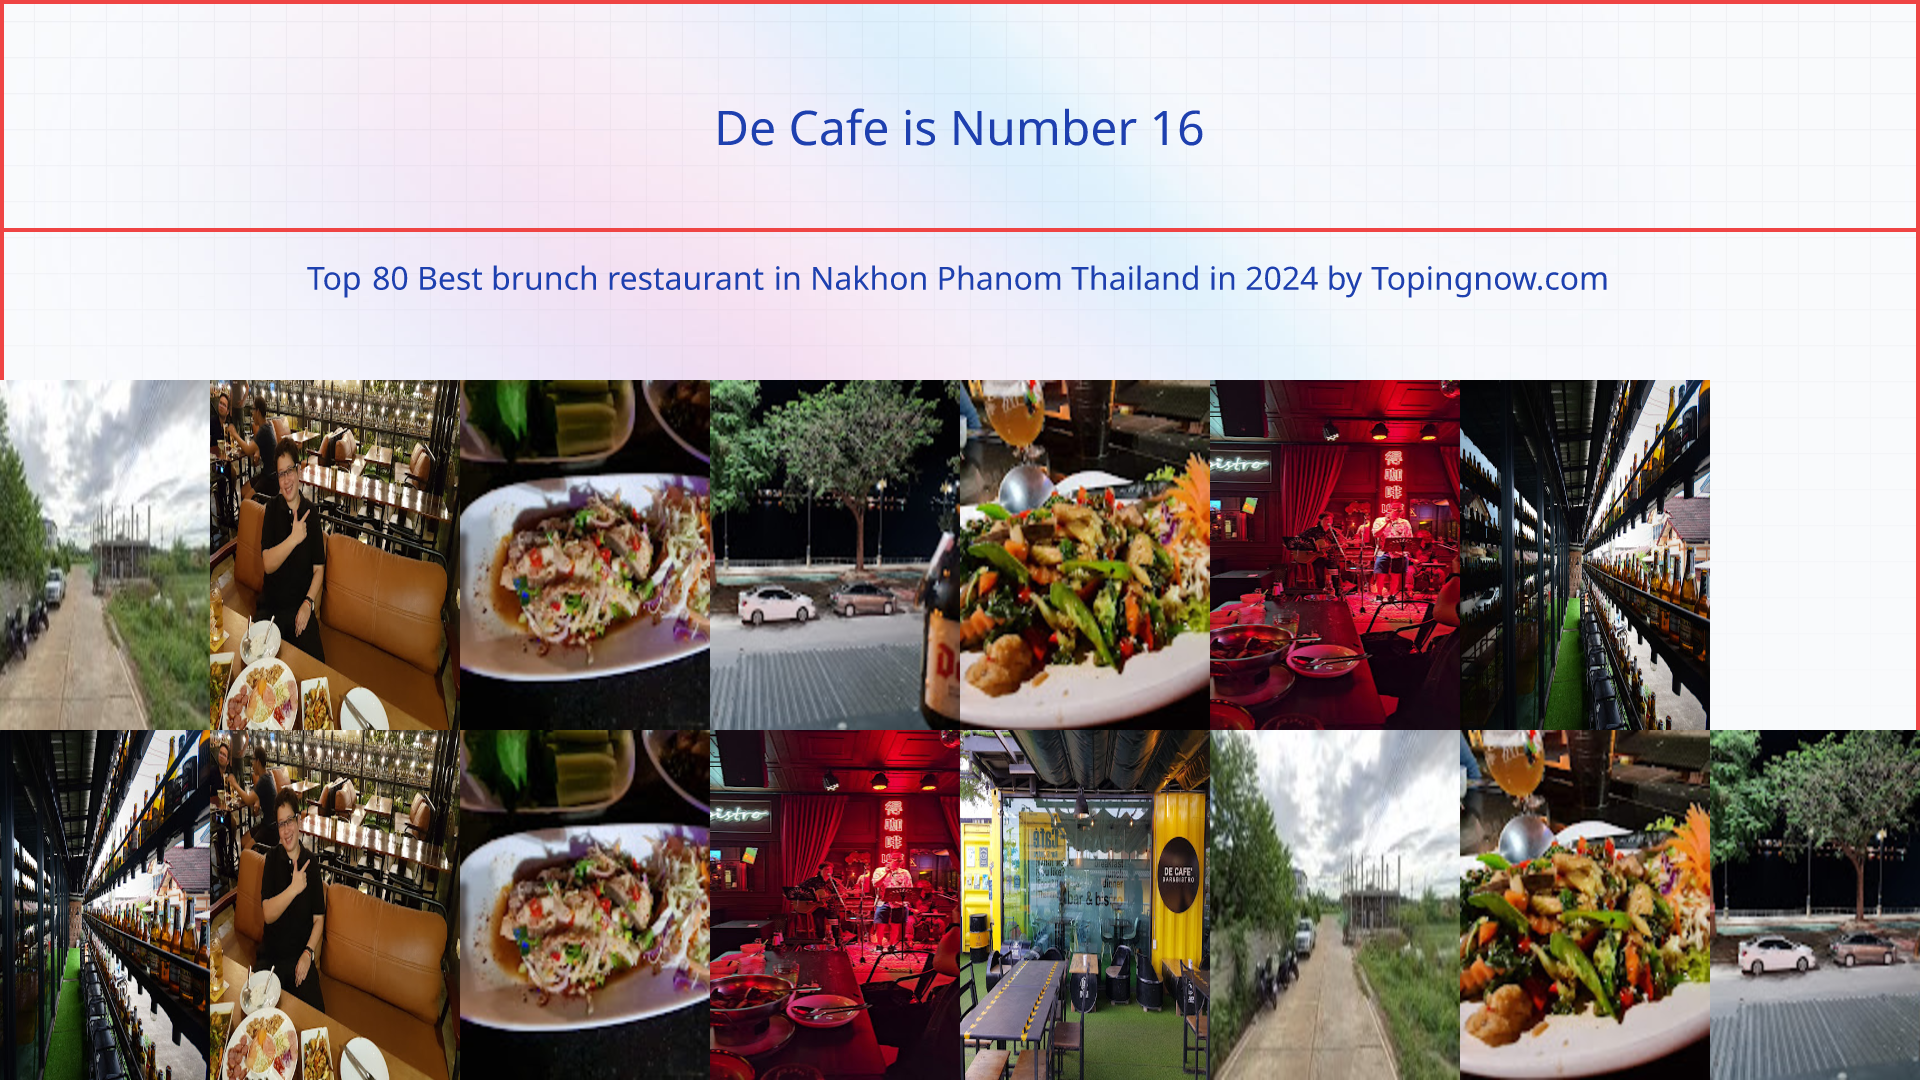 De Cafe: Top 80 Best brunch restaurant in Nakhon Phanom Thailand in 2024